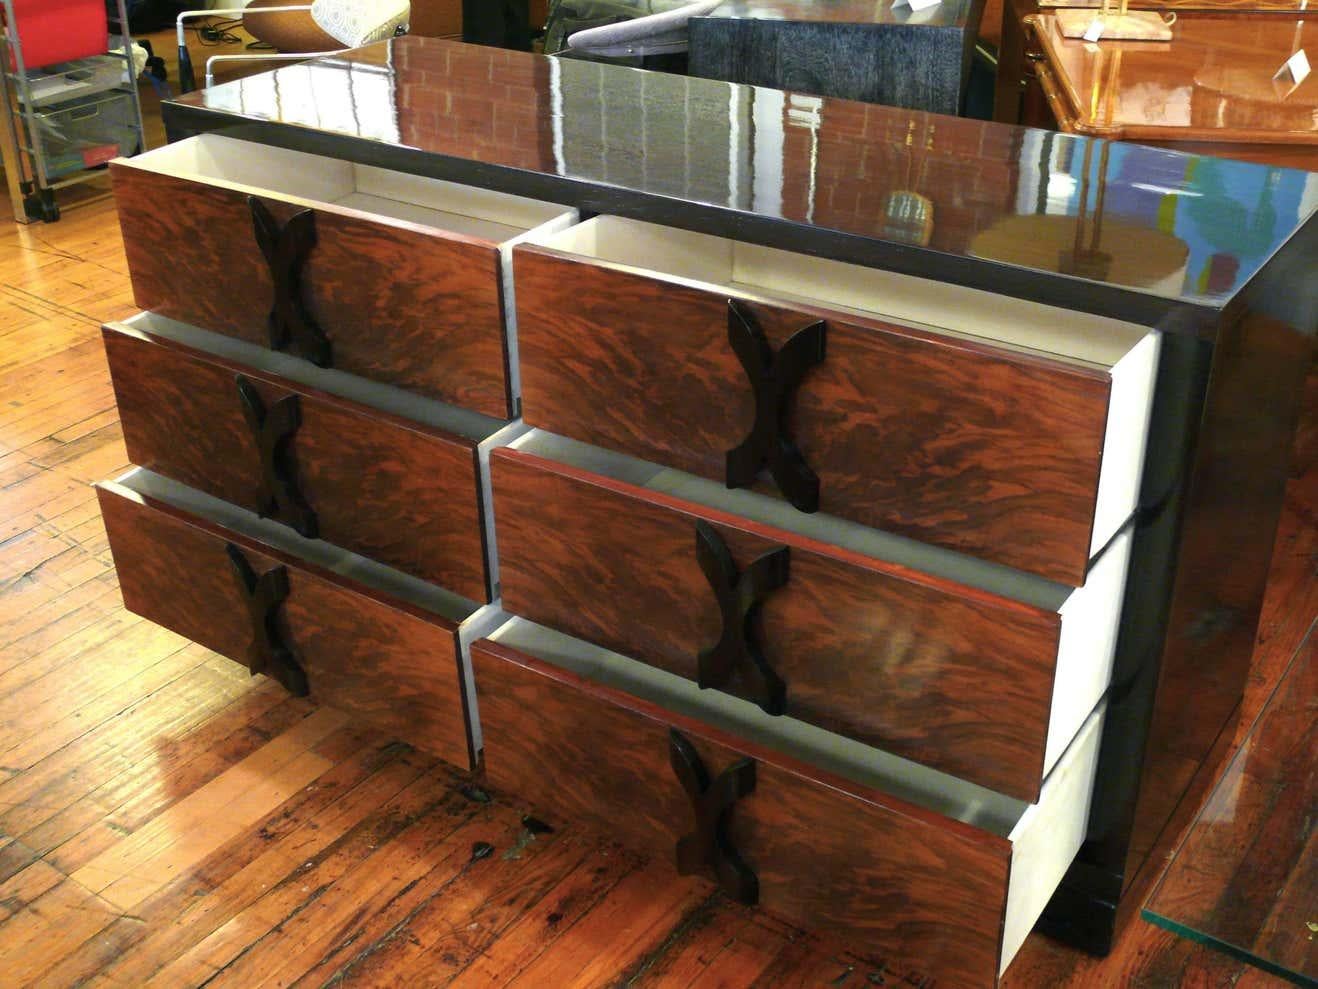 Veneer Six-Drawer Dresser in the Manner of James Mont